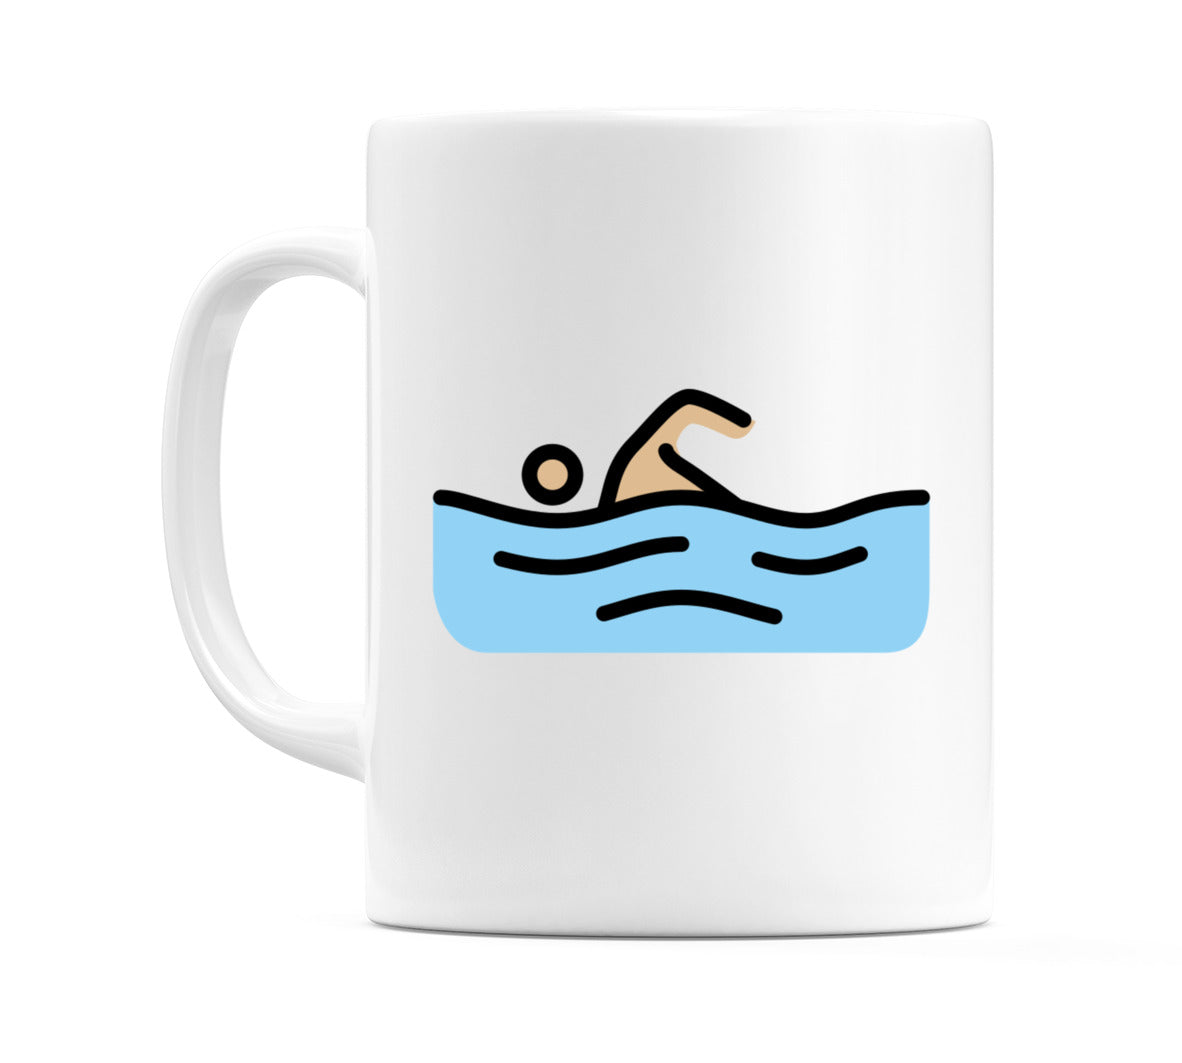 Person Swimming: Medium-Light Skin Tone Emoji Mug